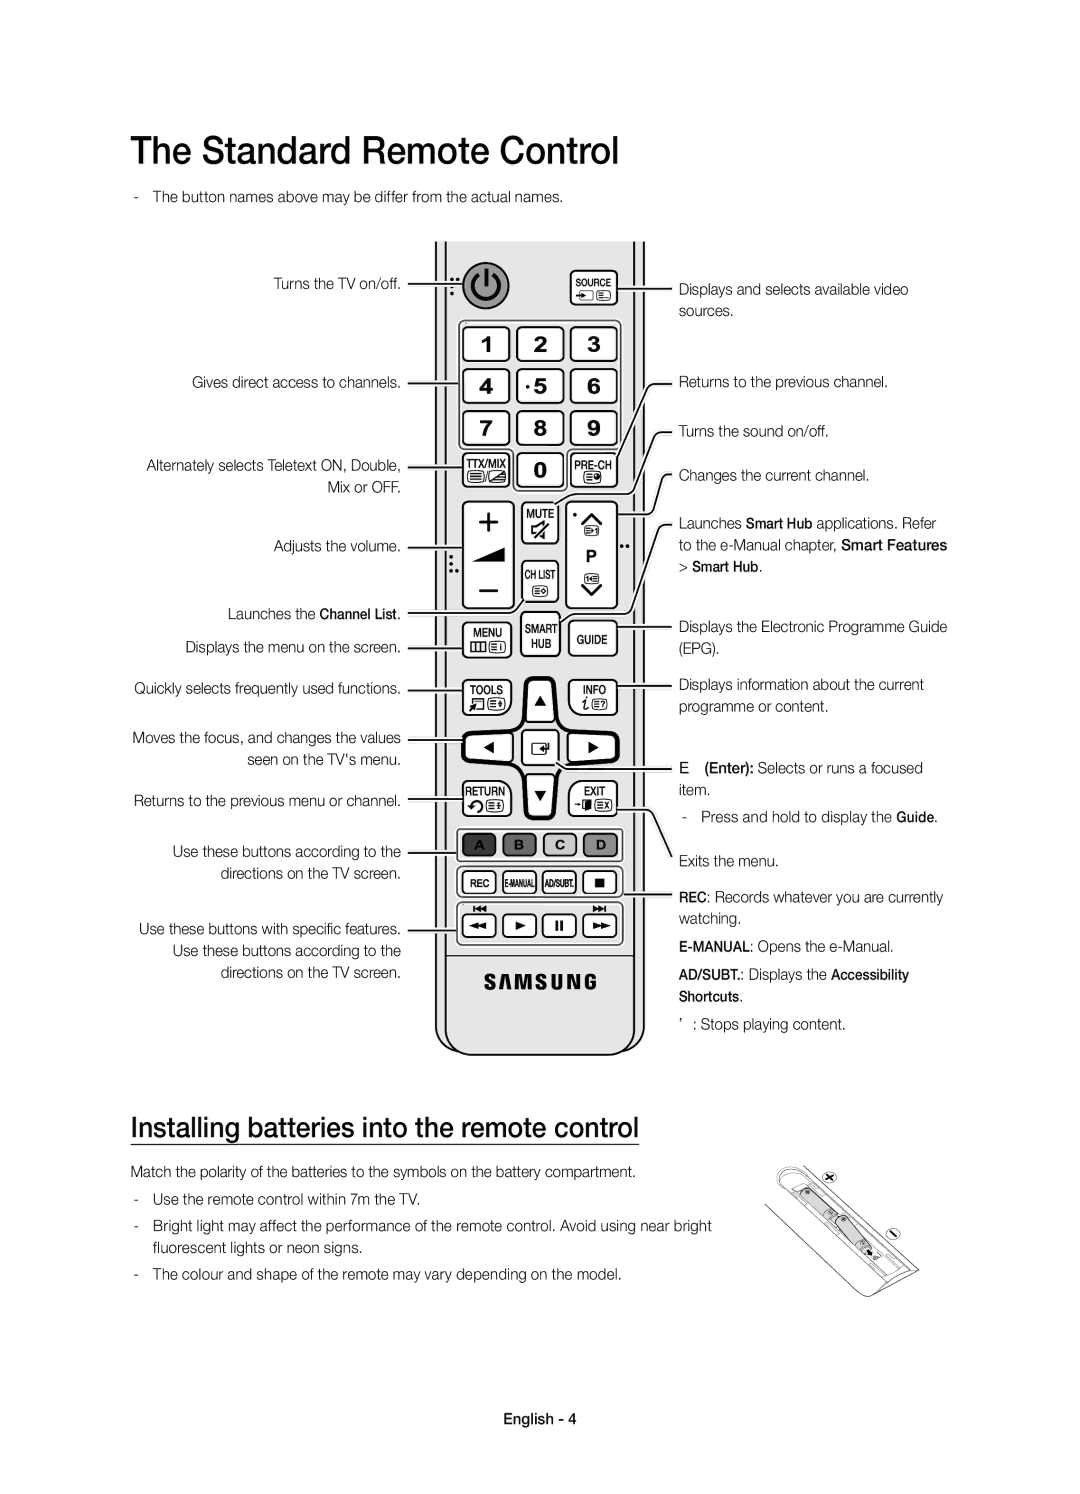 Samsung UE88JS9580QXZG manual Standard Remote Control, Installing batteries into the remote control, Adjusts the volume 